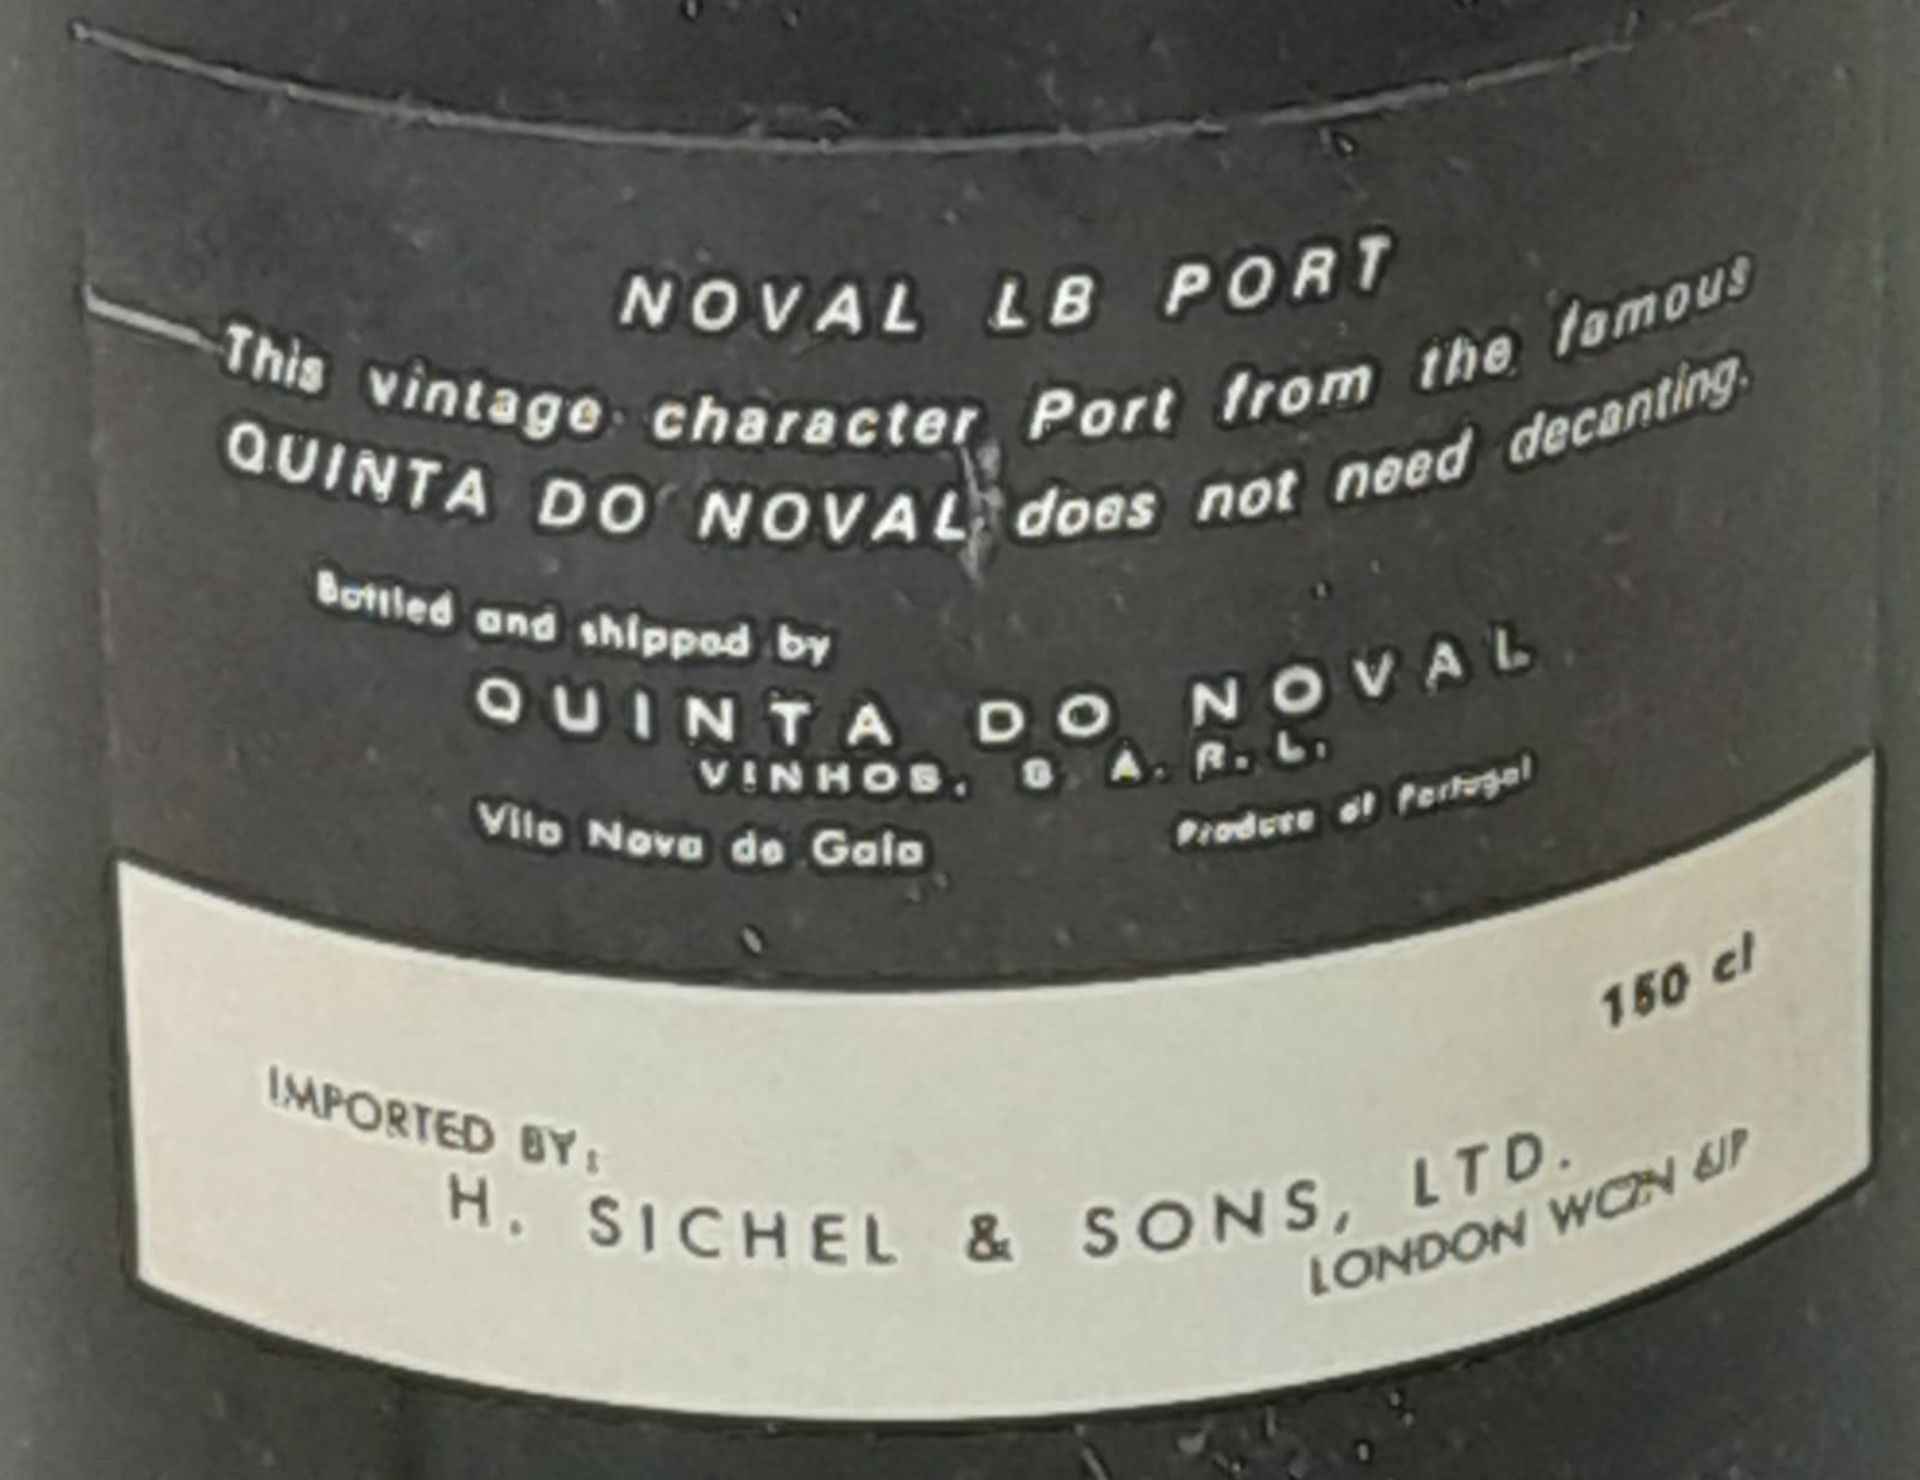 A Large Bottle of Noval LB Port in a Wooden Case - 150cl. - Bild 4 aus 7